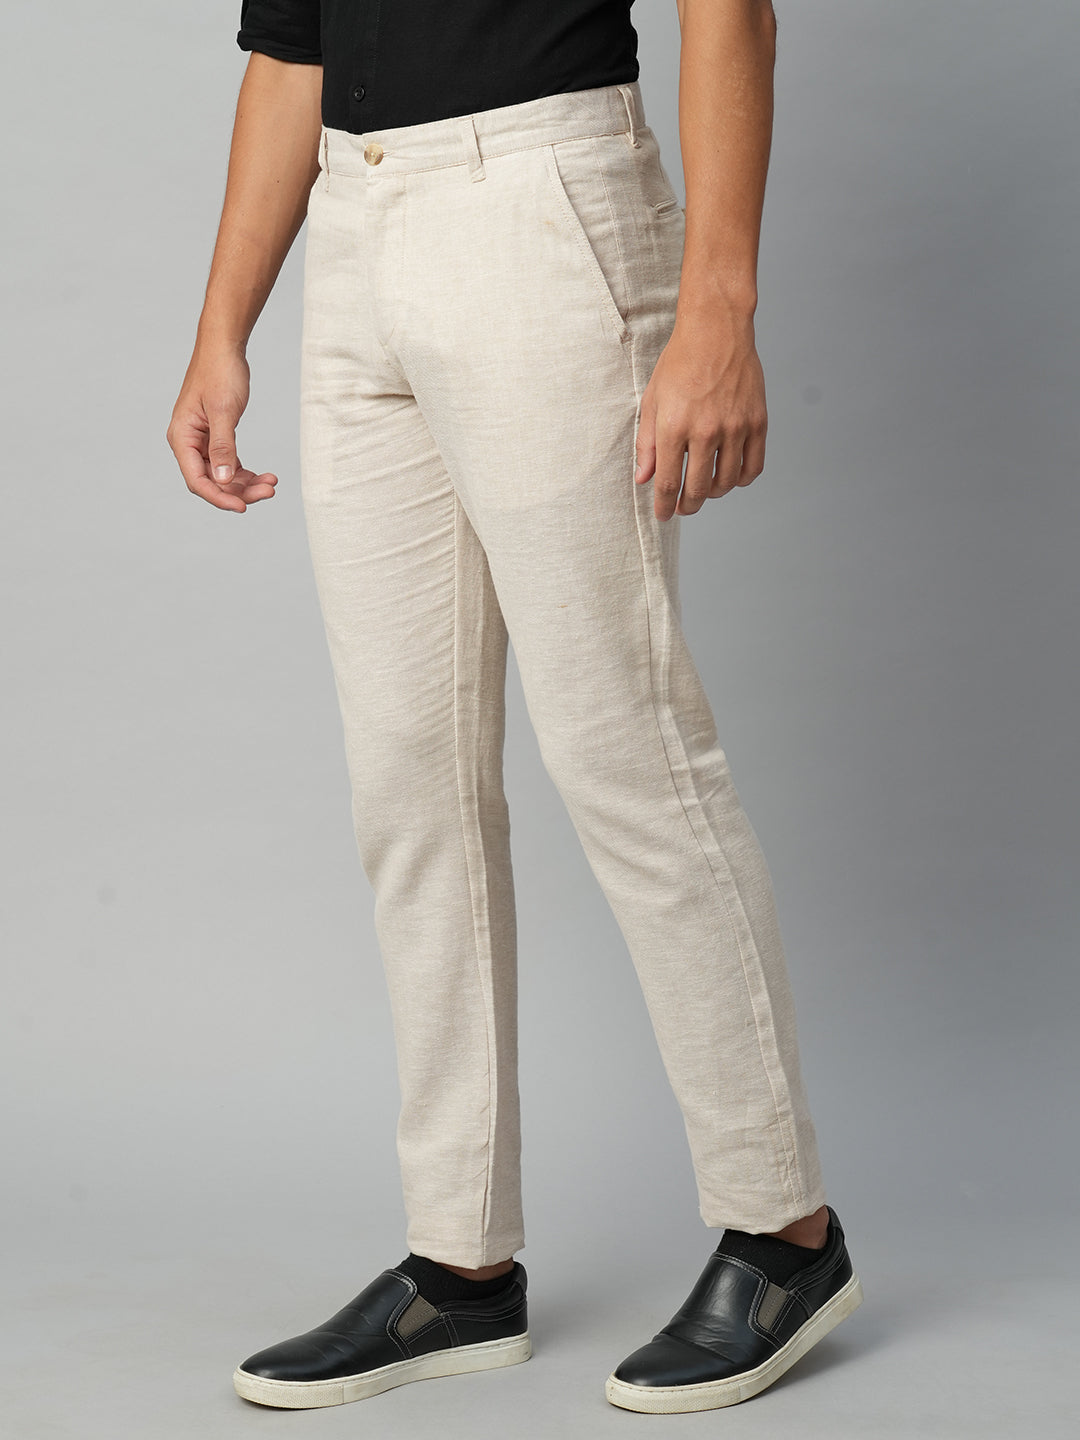 Buy Ice Grey Trousers  Pants for Men by Uncrazy Online  Ajiocom